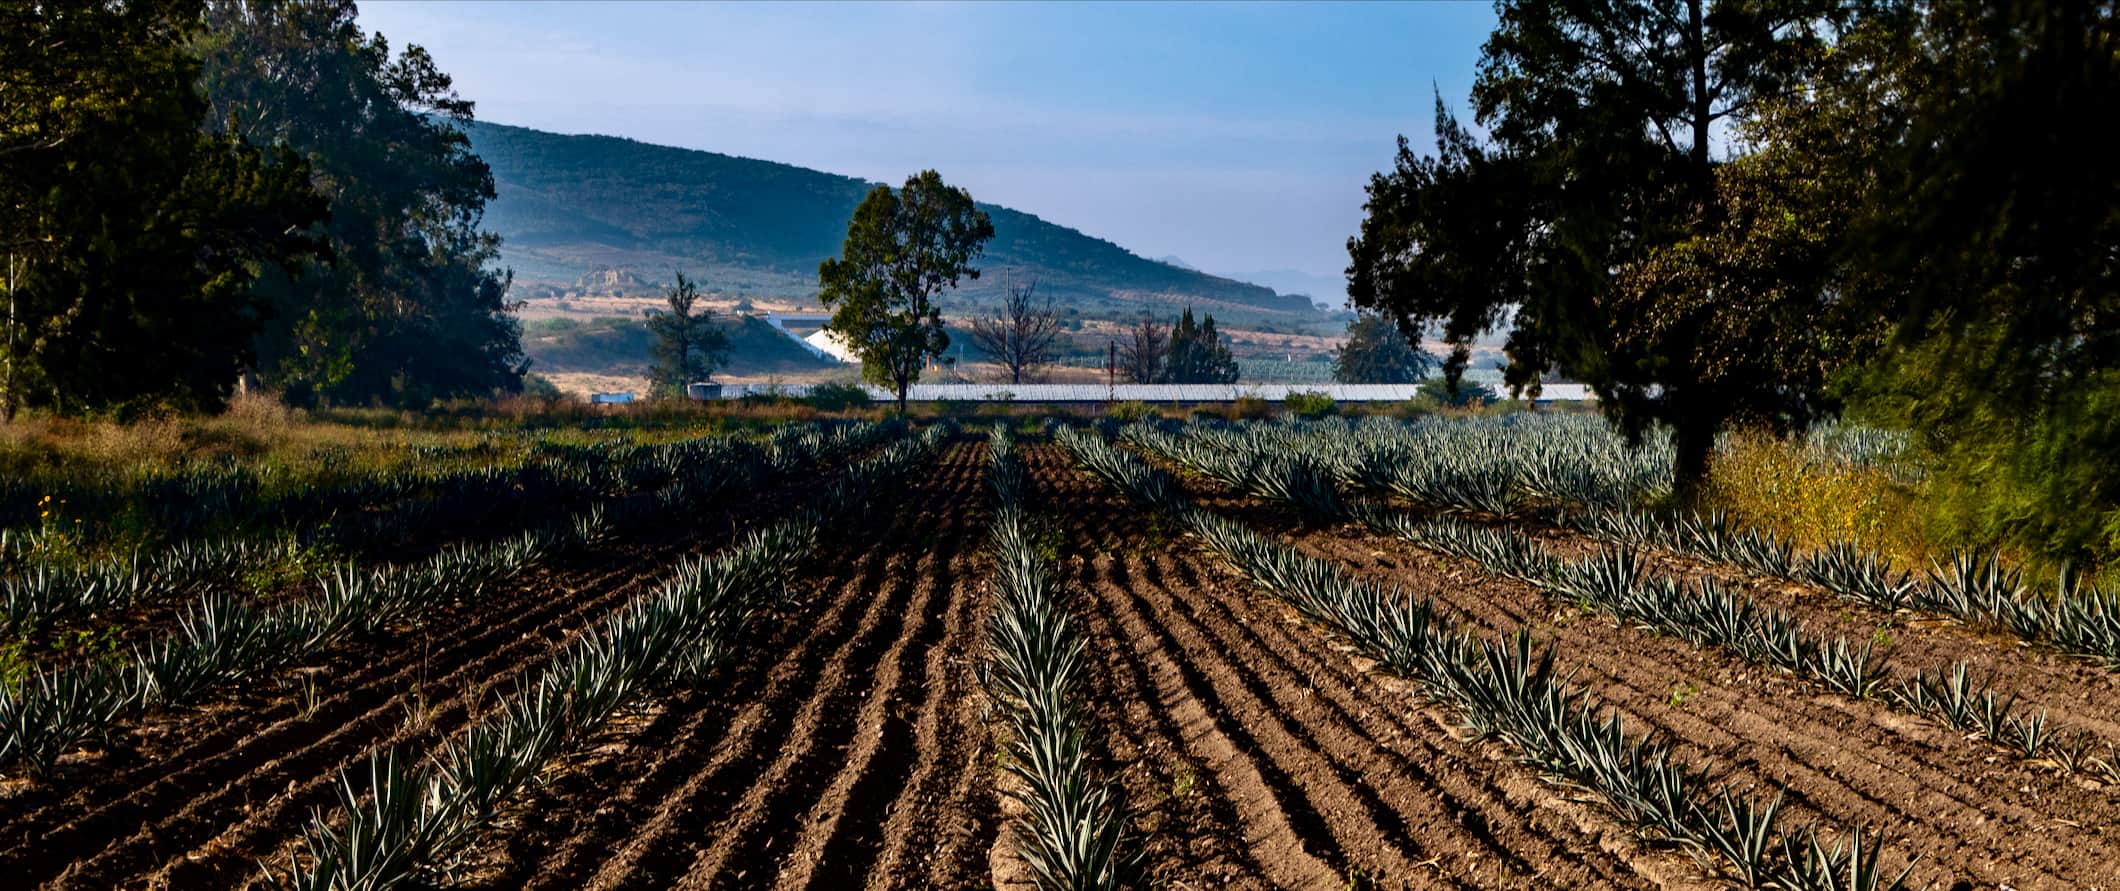 A sprawling field of agave planted to make mezcal near Oaxaca, Mexico